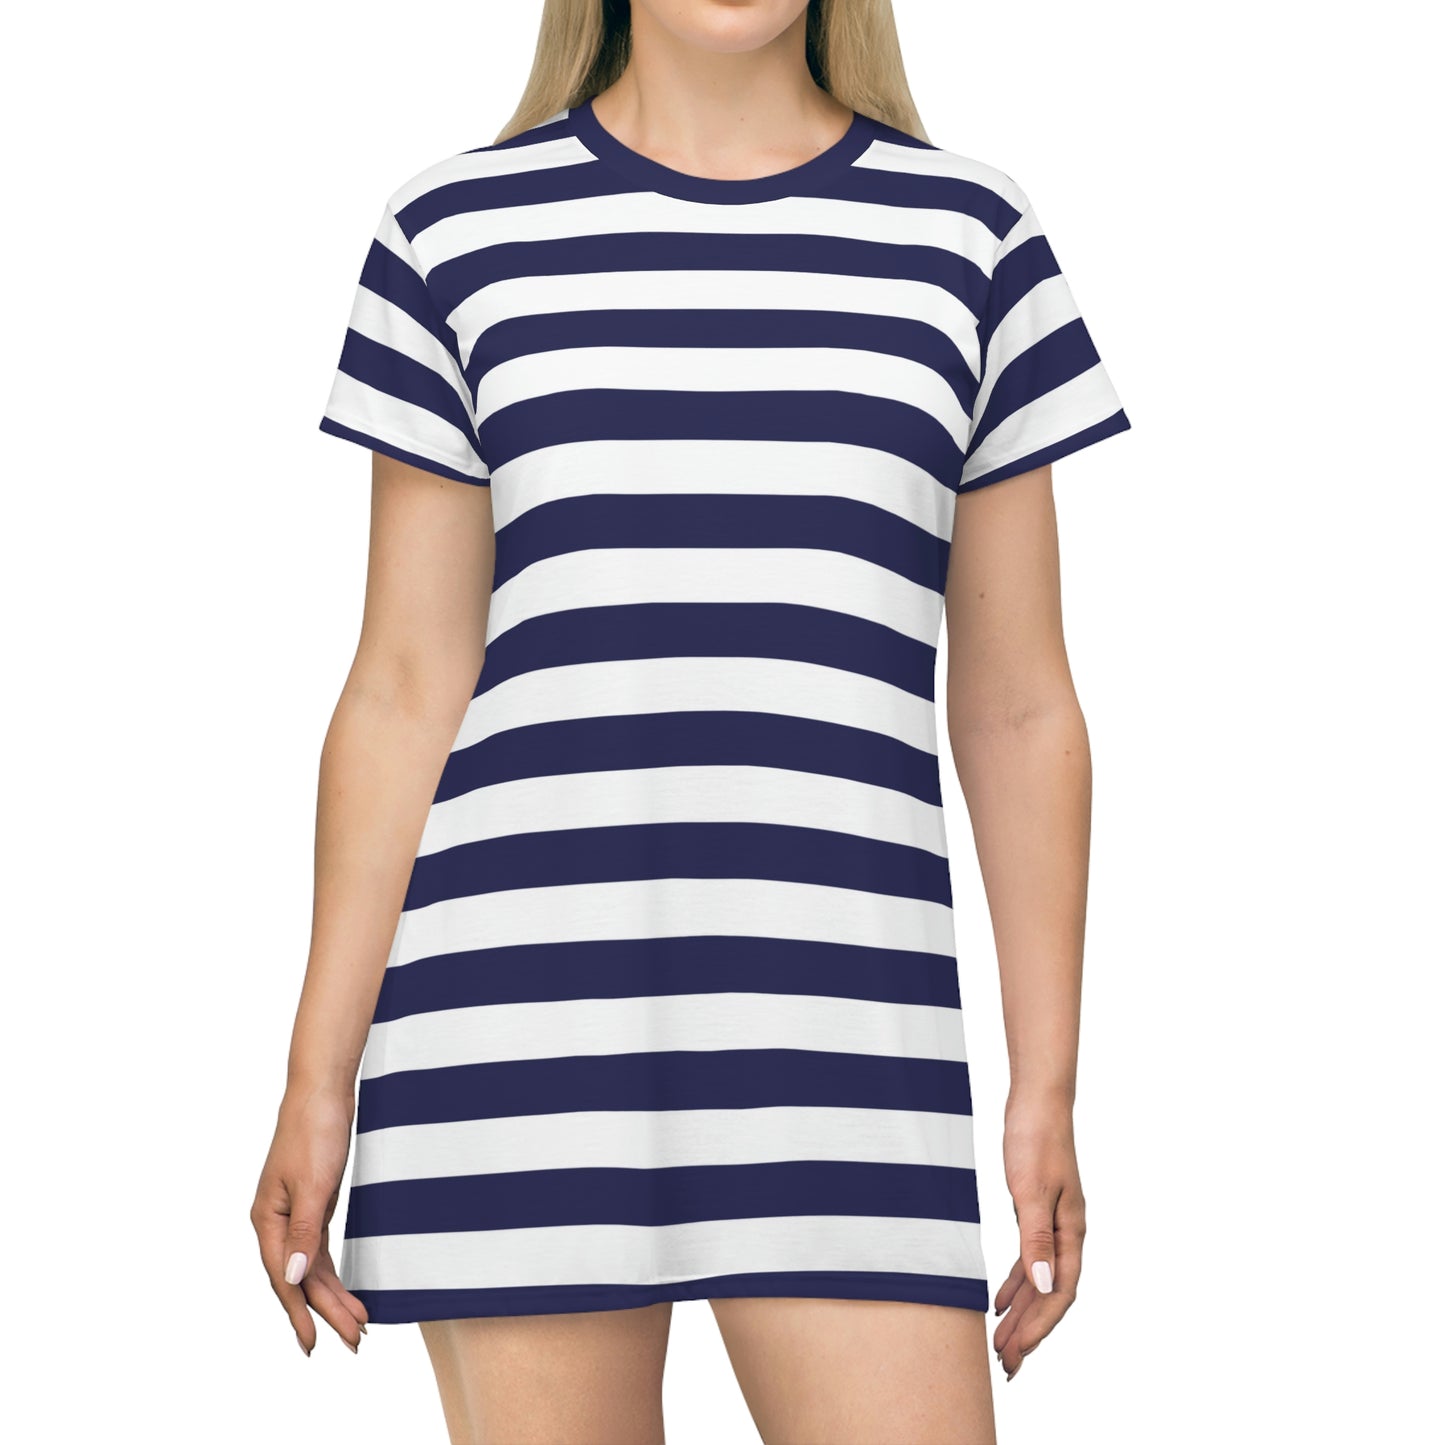 Blue White Striped Tshirt Dress, Navy Women Summer Beach Cute Festival Party Casual Designer Short Sleeve Girls Tee Starcove Fashion